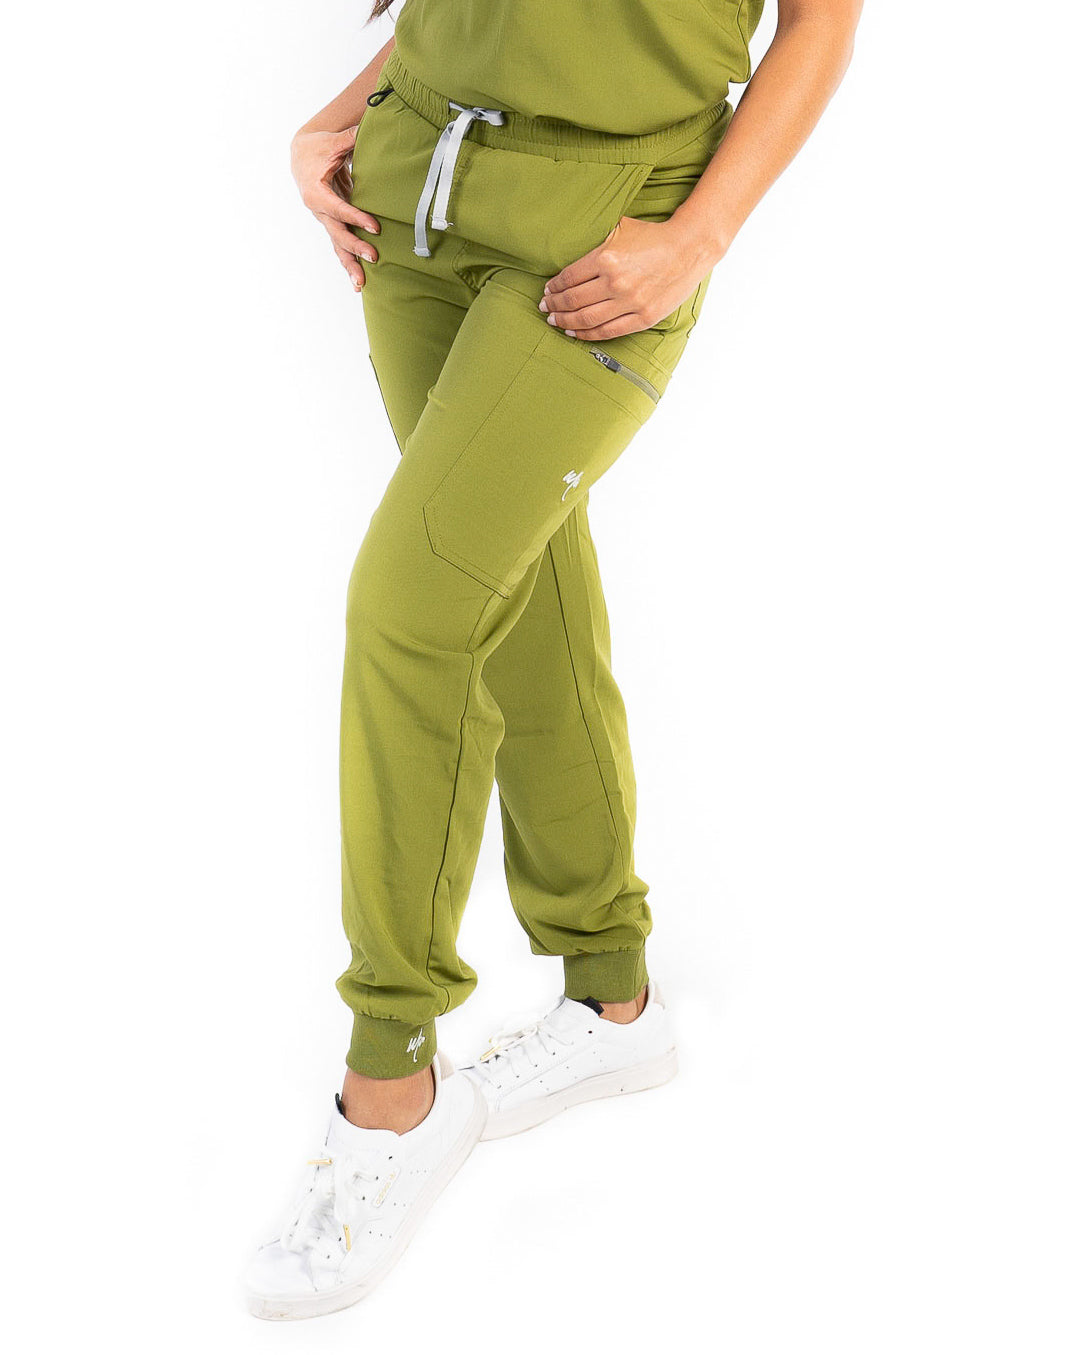 Gap Jogger Pants Womens Small S Soft Lyocell Army Green High Rise | eBay